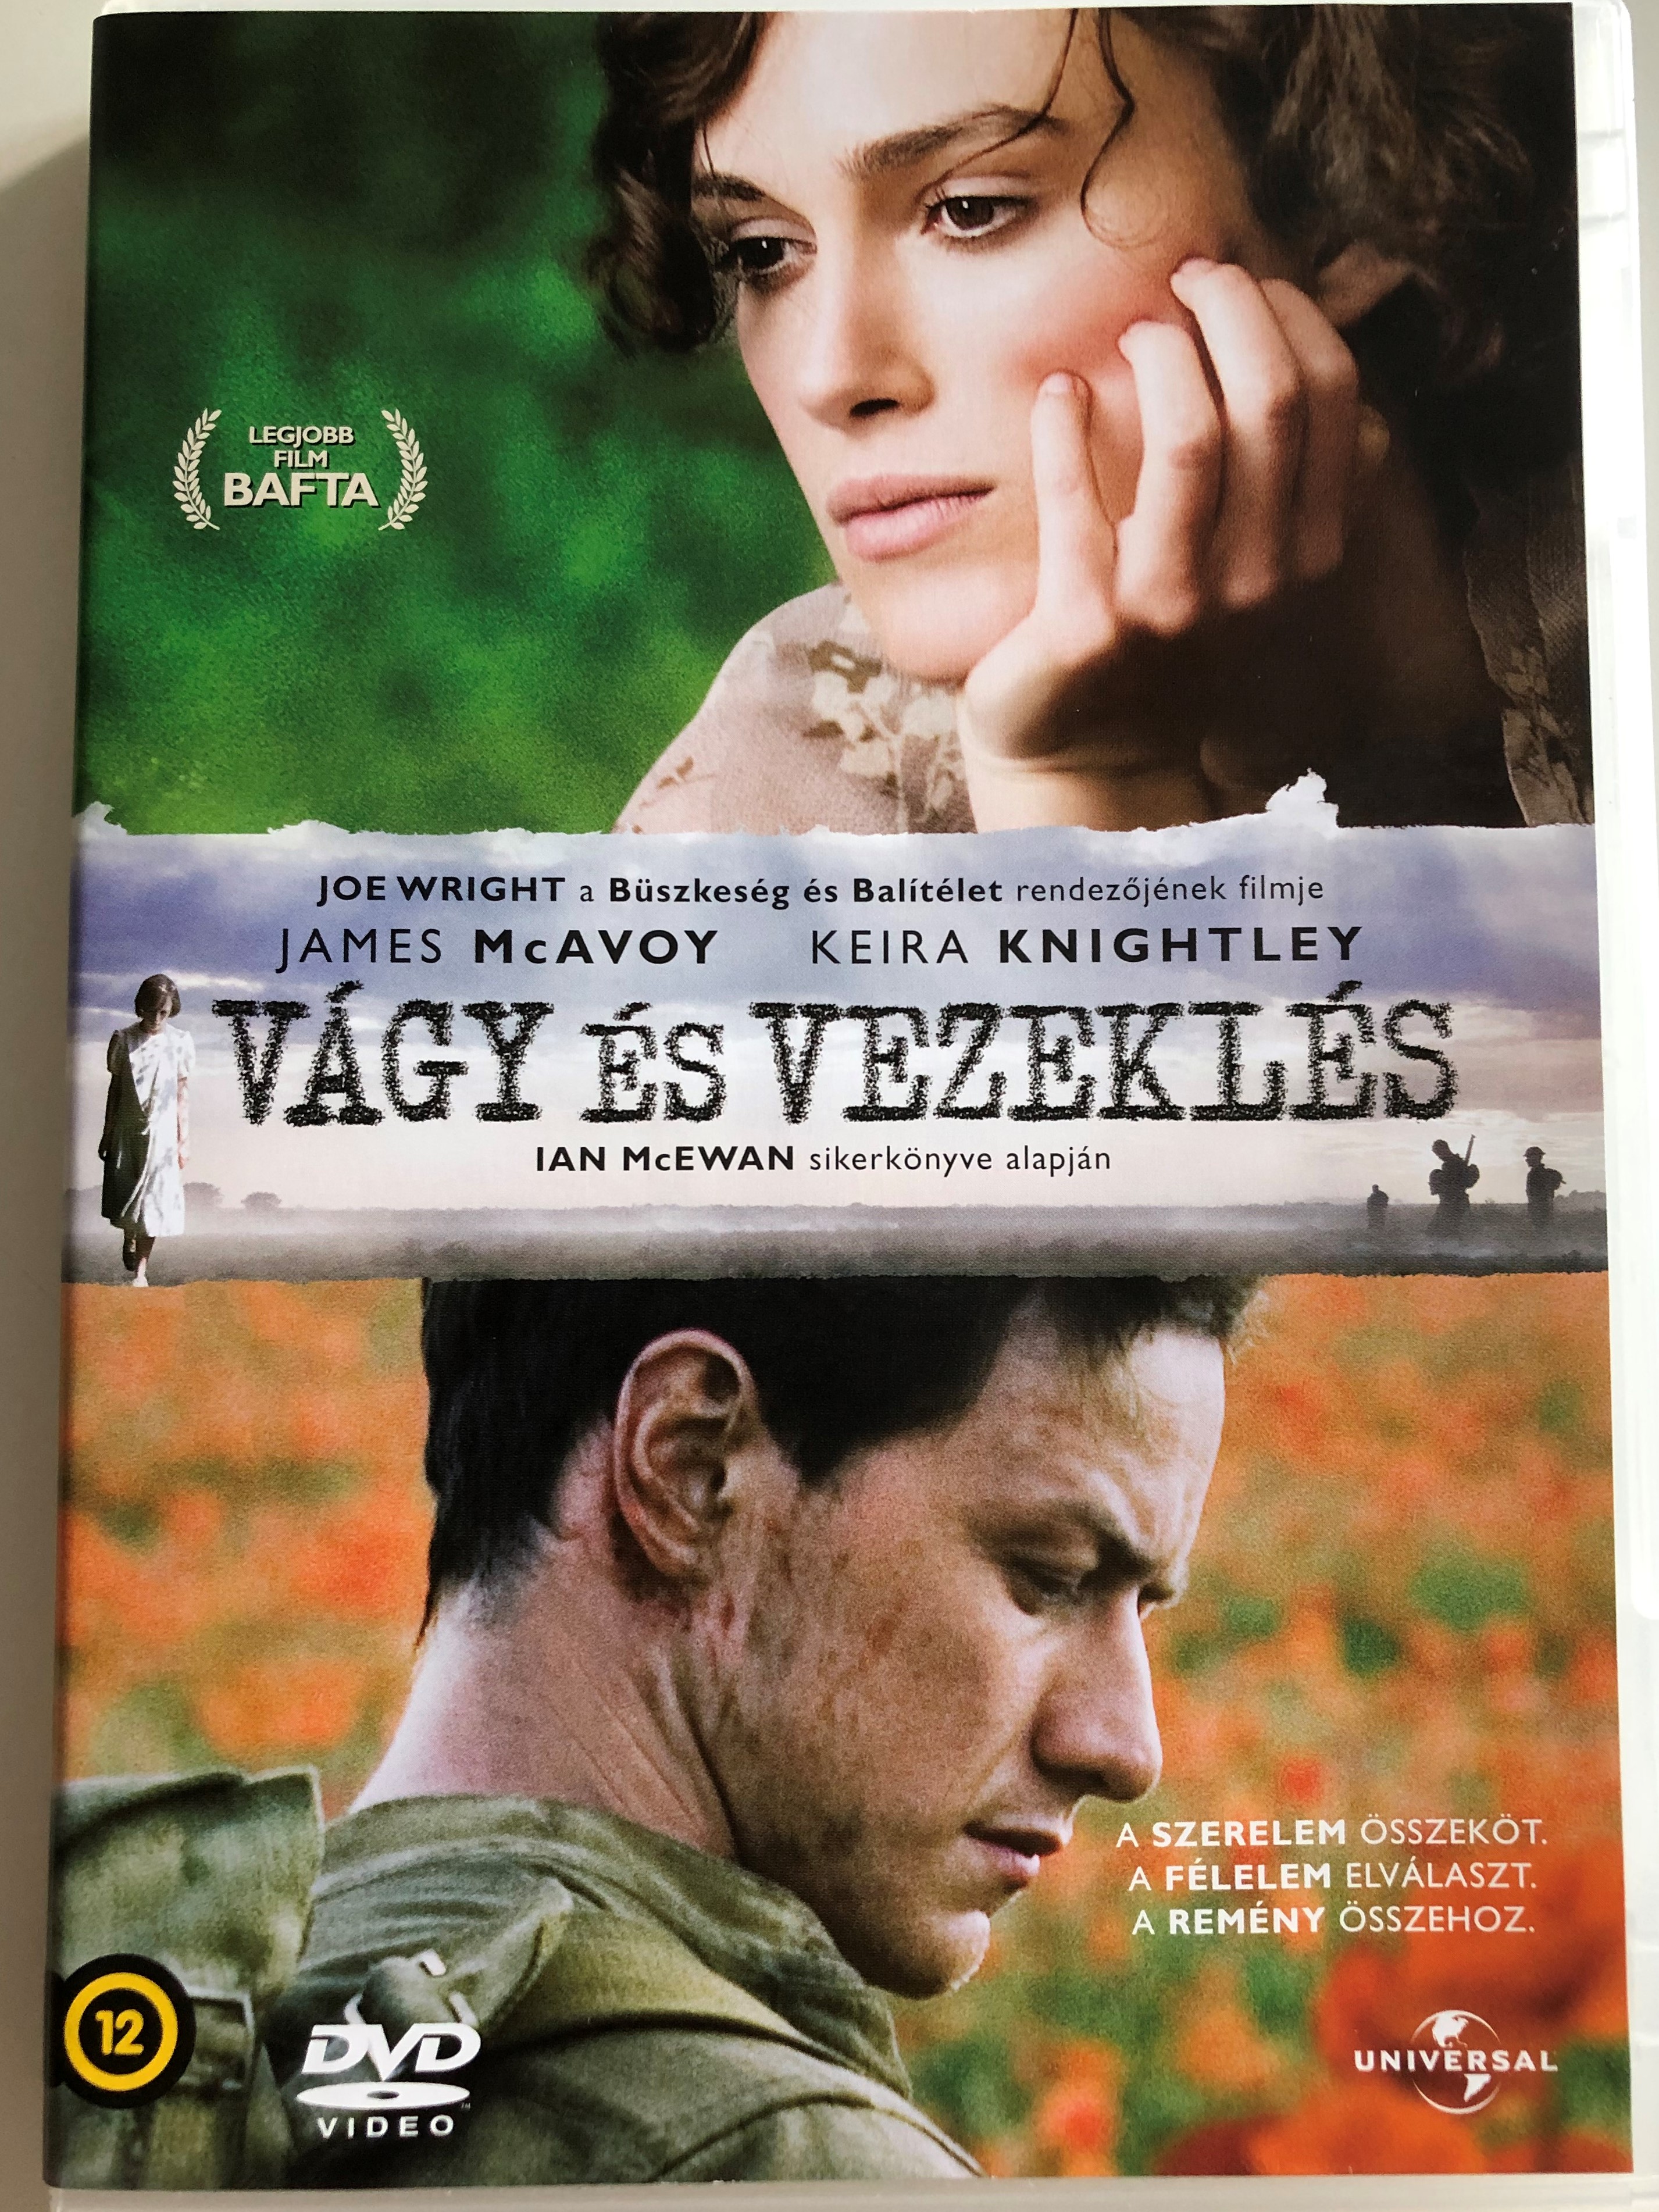 atonement-dvd-2007-v-gy-s-vezekl-s-directed-by-joe-wright-starring-james-mcavoy-keir-knightley-based-on-ian-mcewan-s-bestseller-1-.jpg